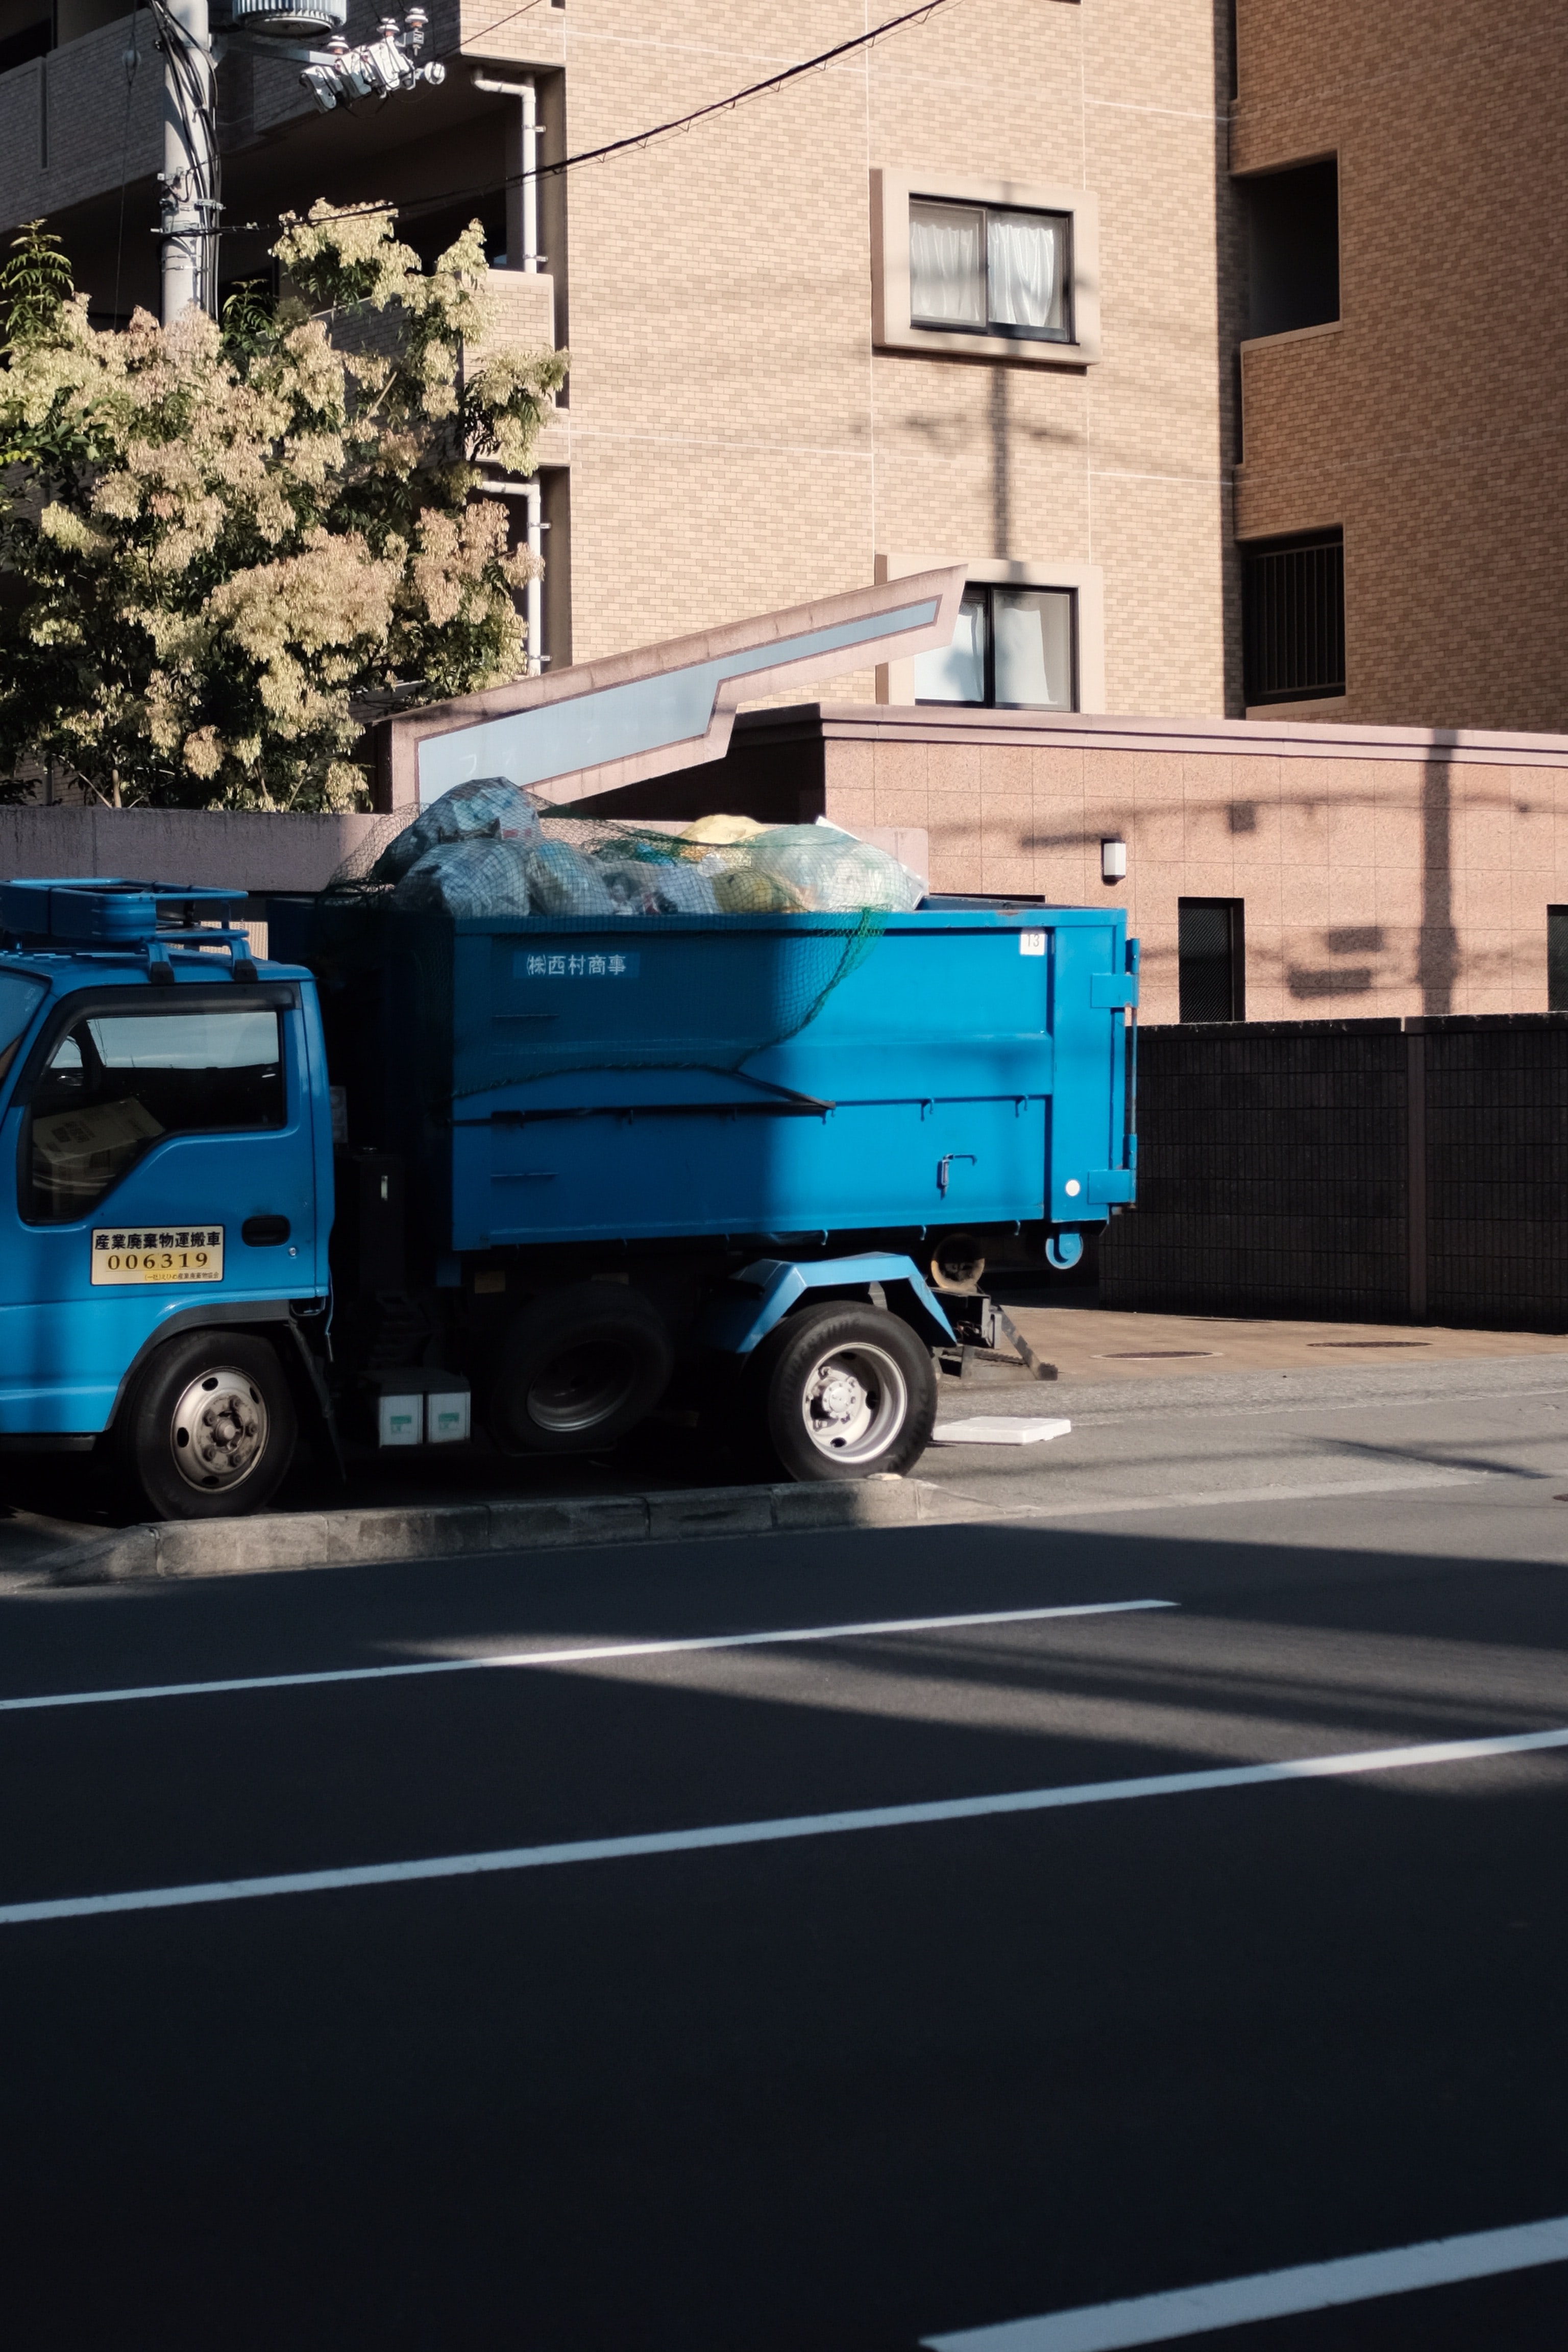 Blue dump truck; image by Mak, via Unsplash.com.